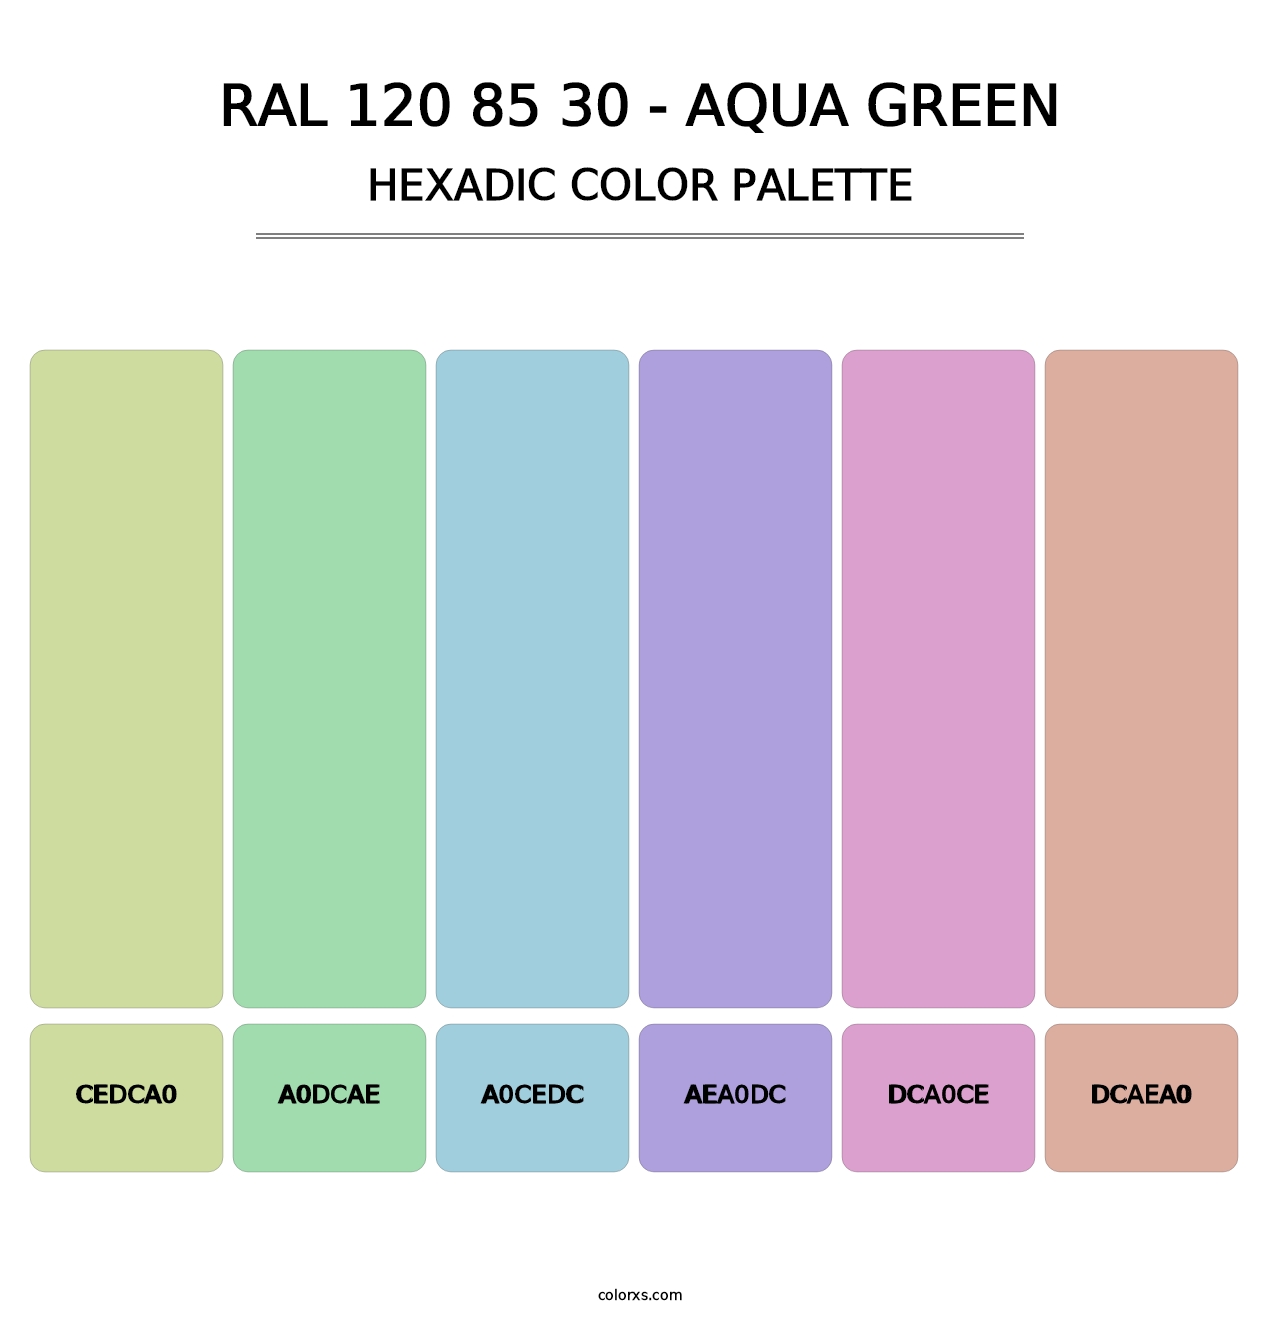 RAL 120 85 30 - Aqua Green - Hexadic Color Palette